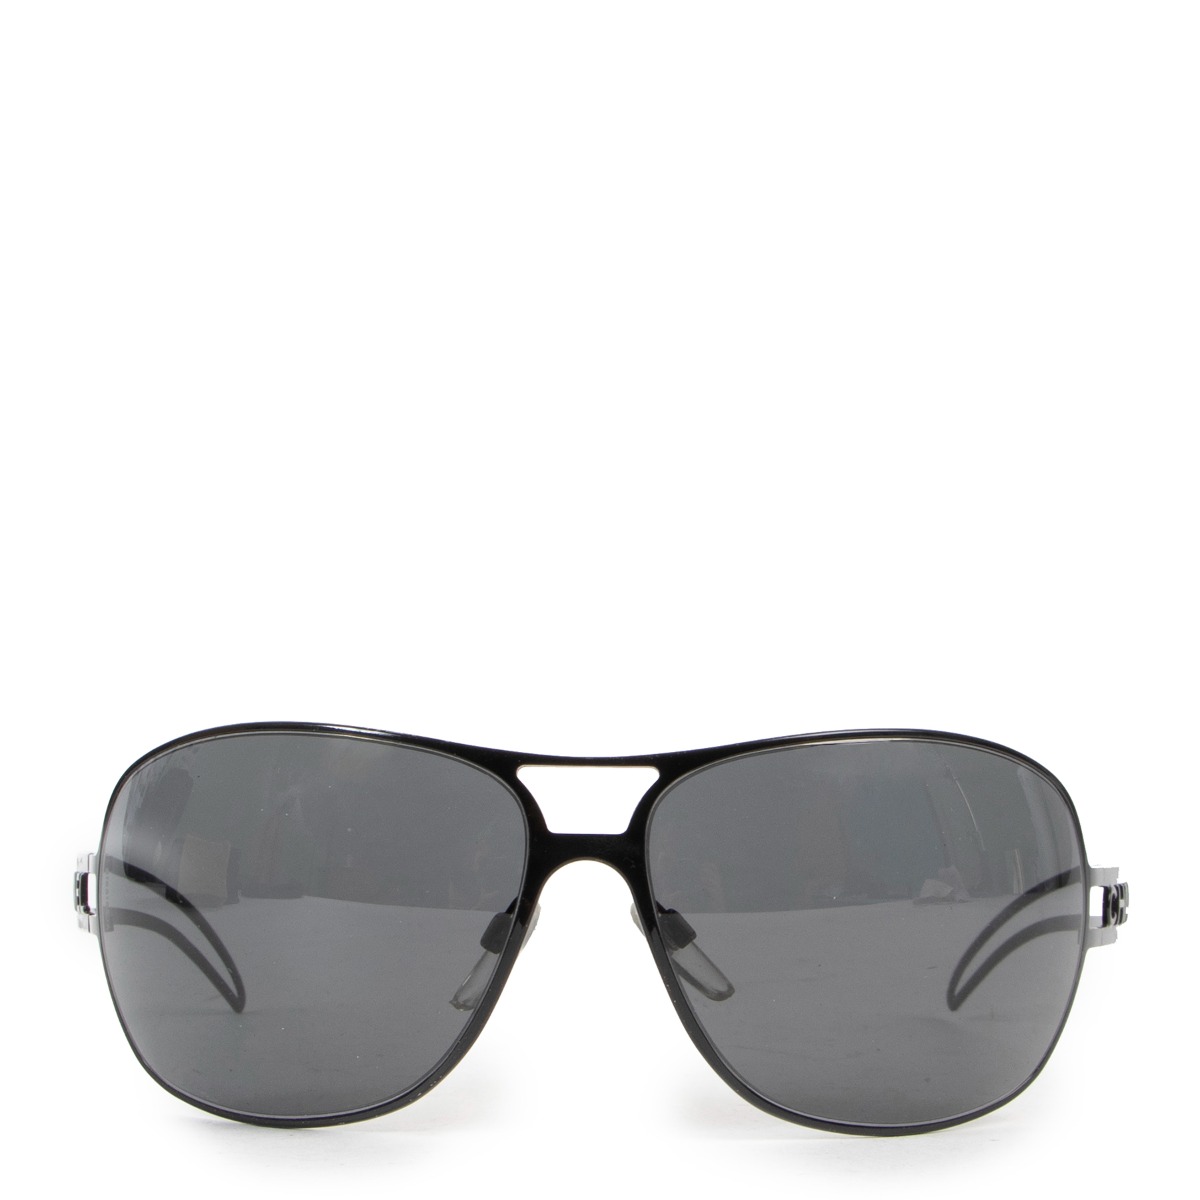 Buy Black Grey Gradient Full Rim Aviator Vincent Chase Polorized MAVERICK  2.0. VC S15764-C2 Sunglasses at LensKart.com